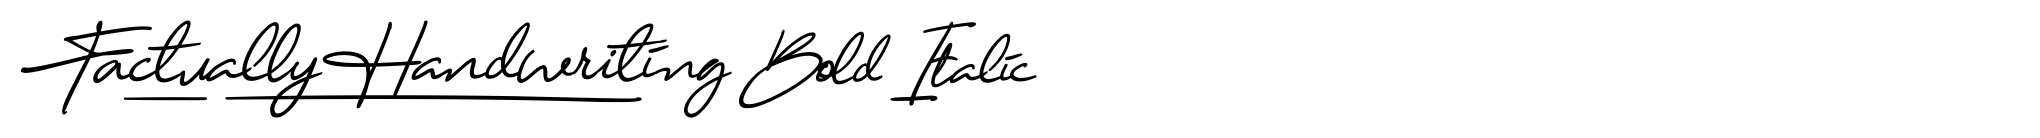 Factually Handwriting Bold Italic image